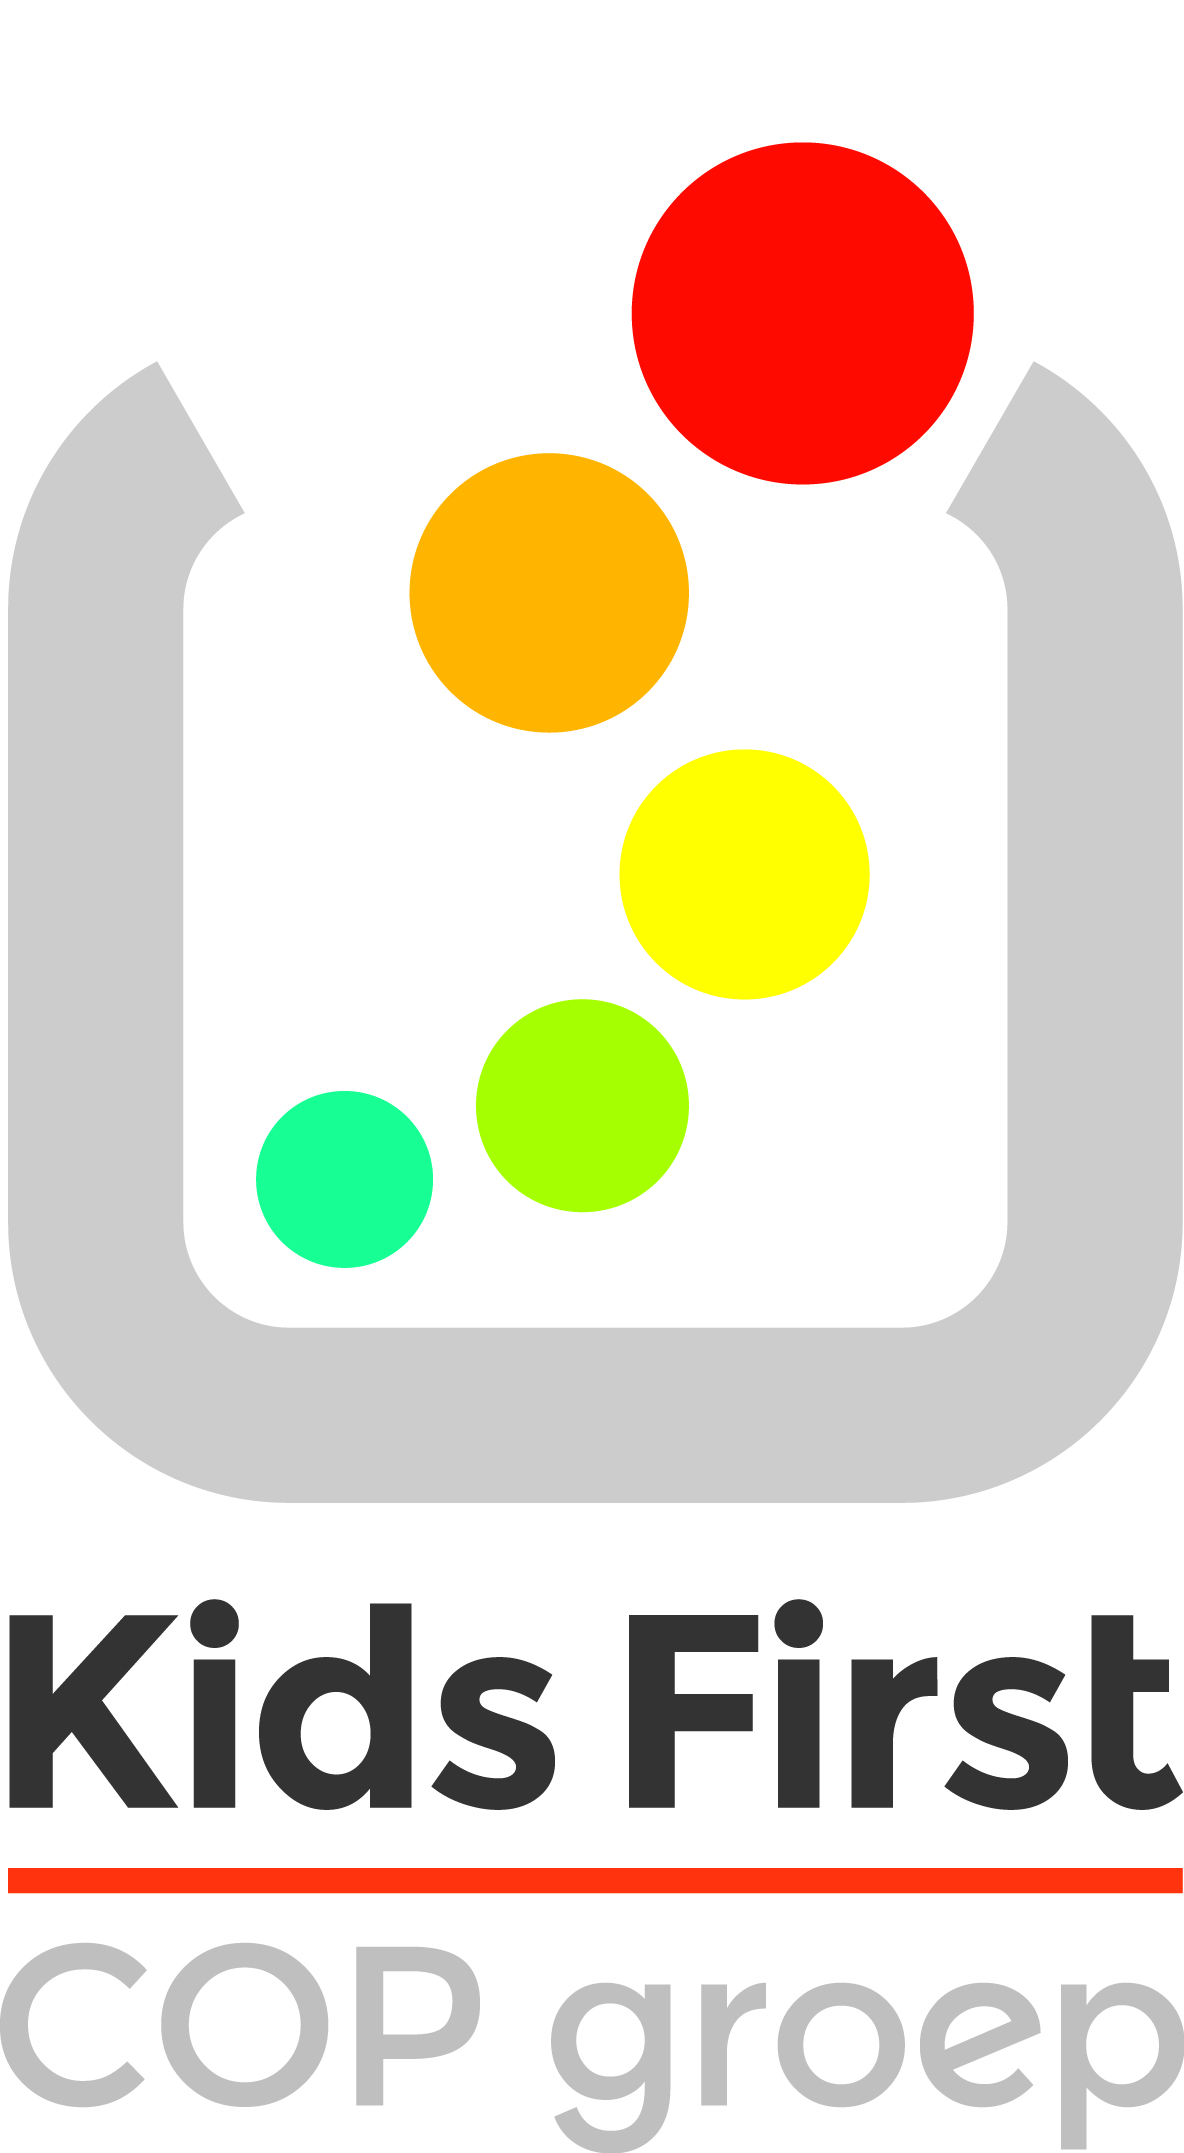 Kids First COP groep logo